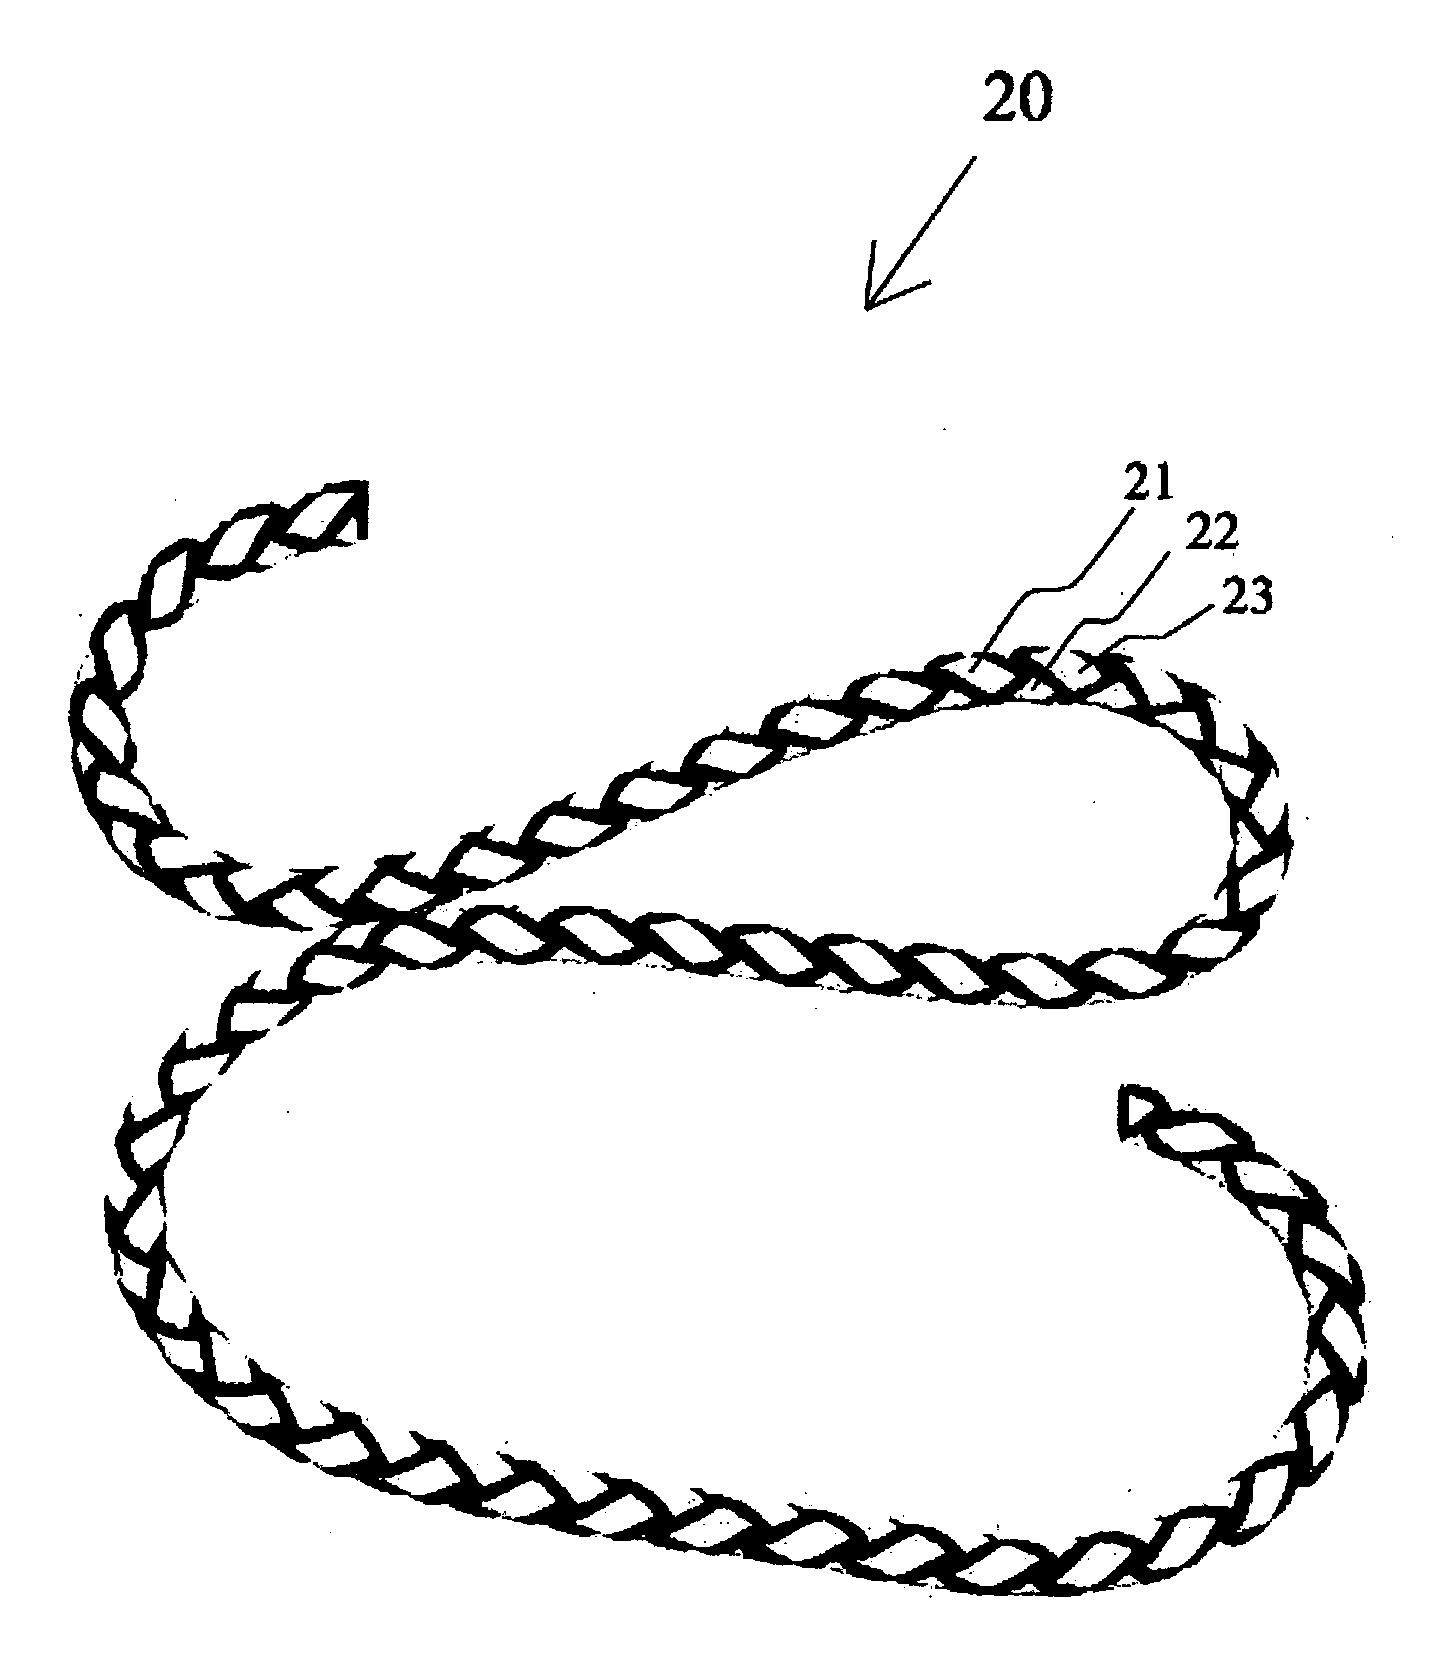 Abrasion resistant omnidirectionally reflective rope